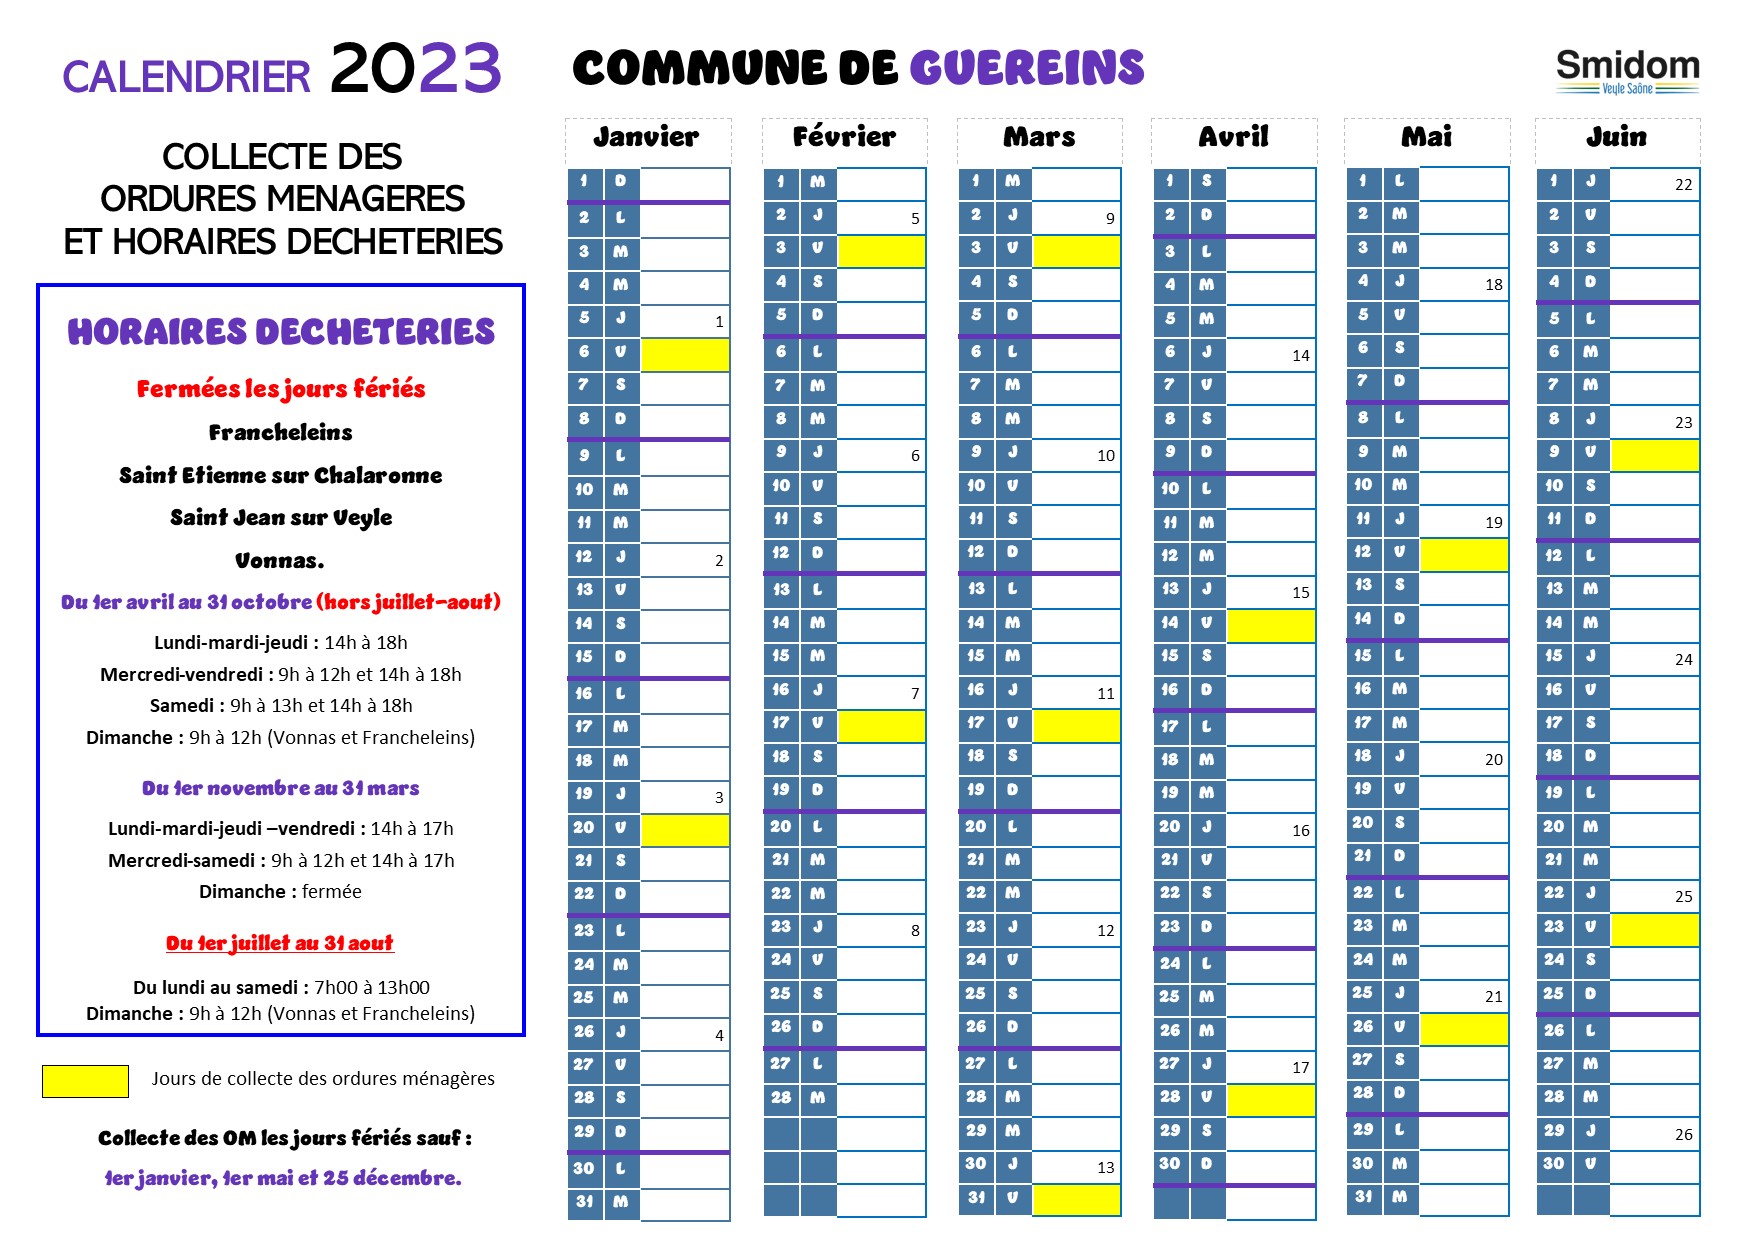 Guéreins Calendrier 2023.jpg